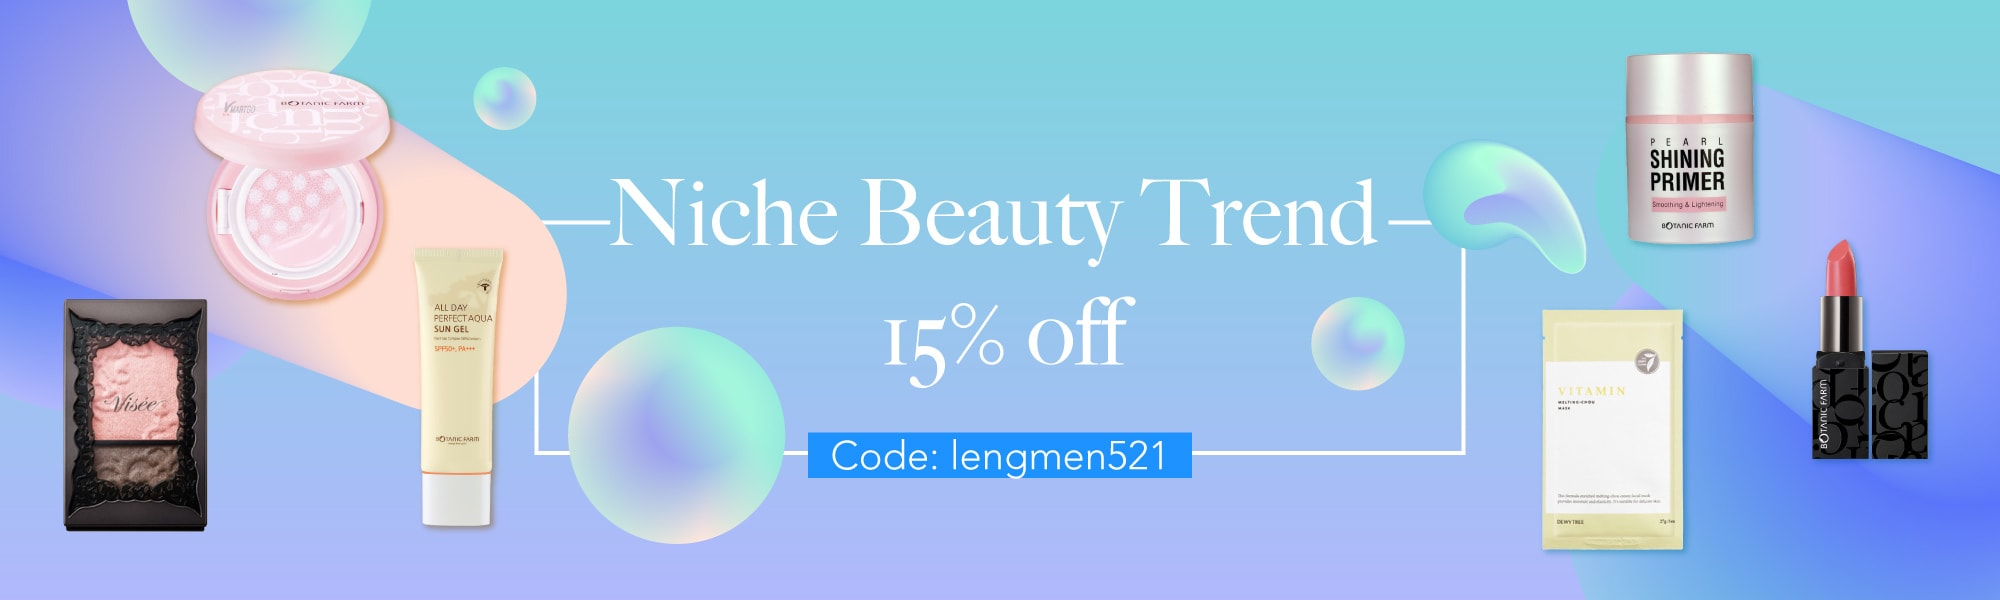 Niche Beauty Trend   15% off